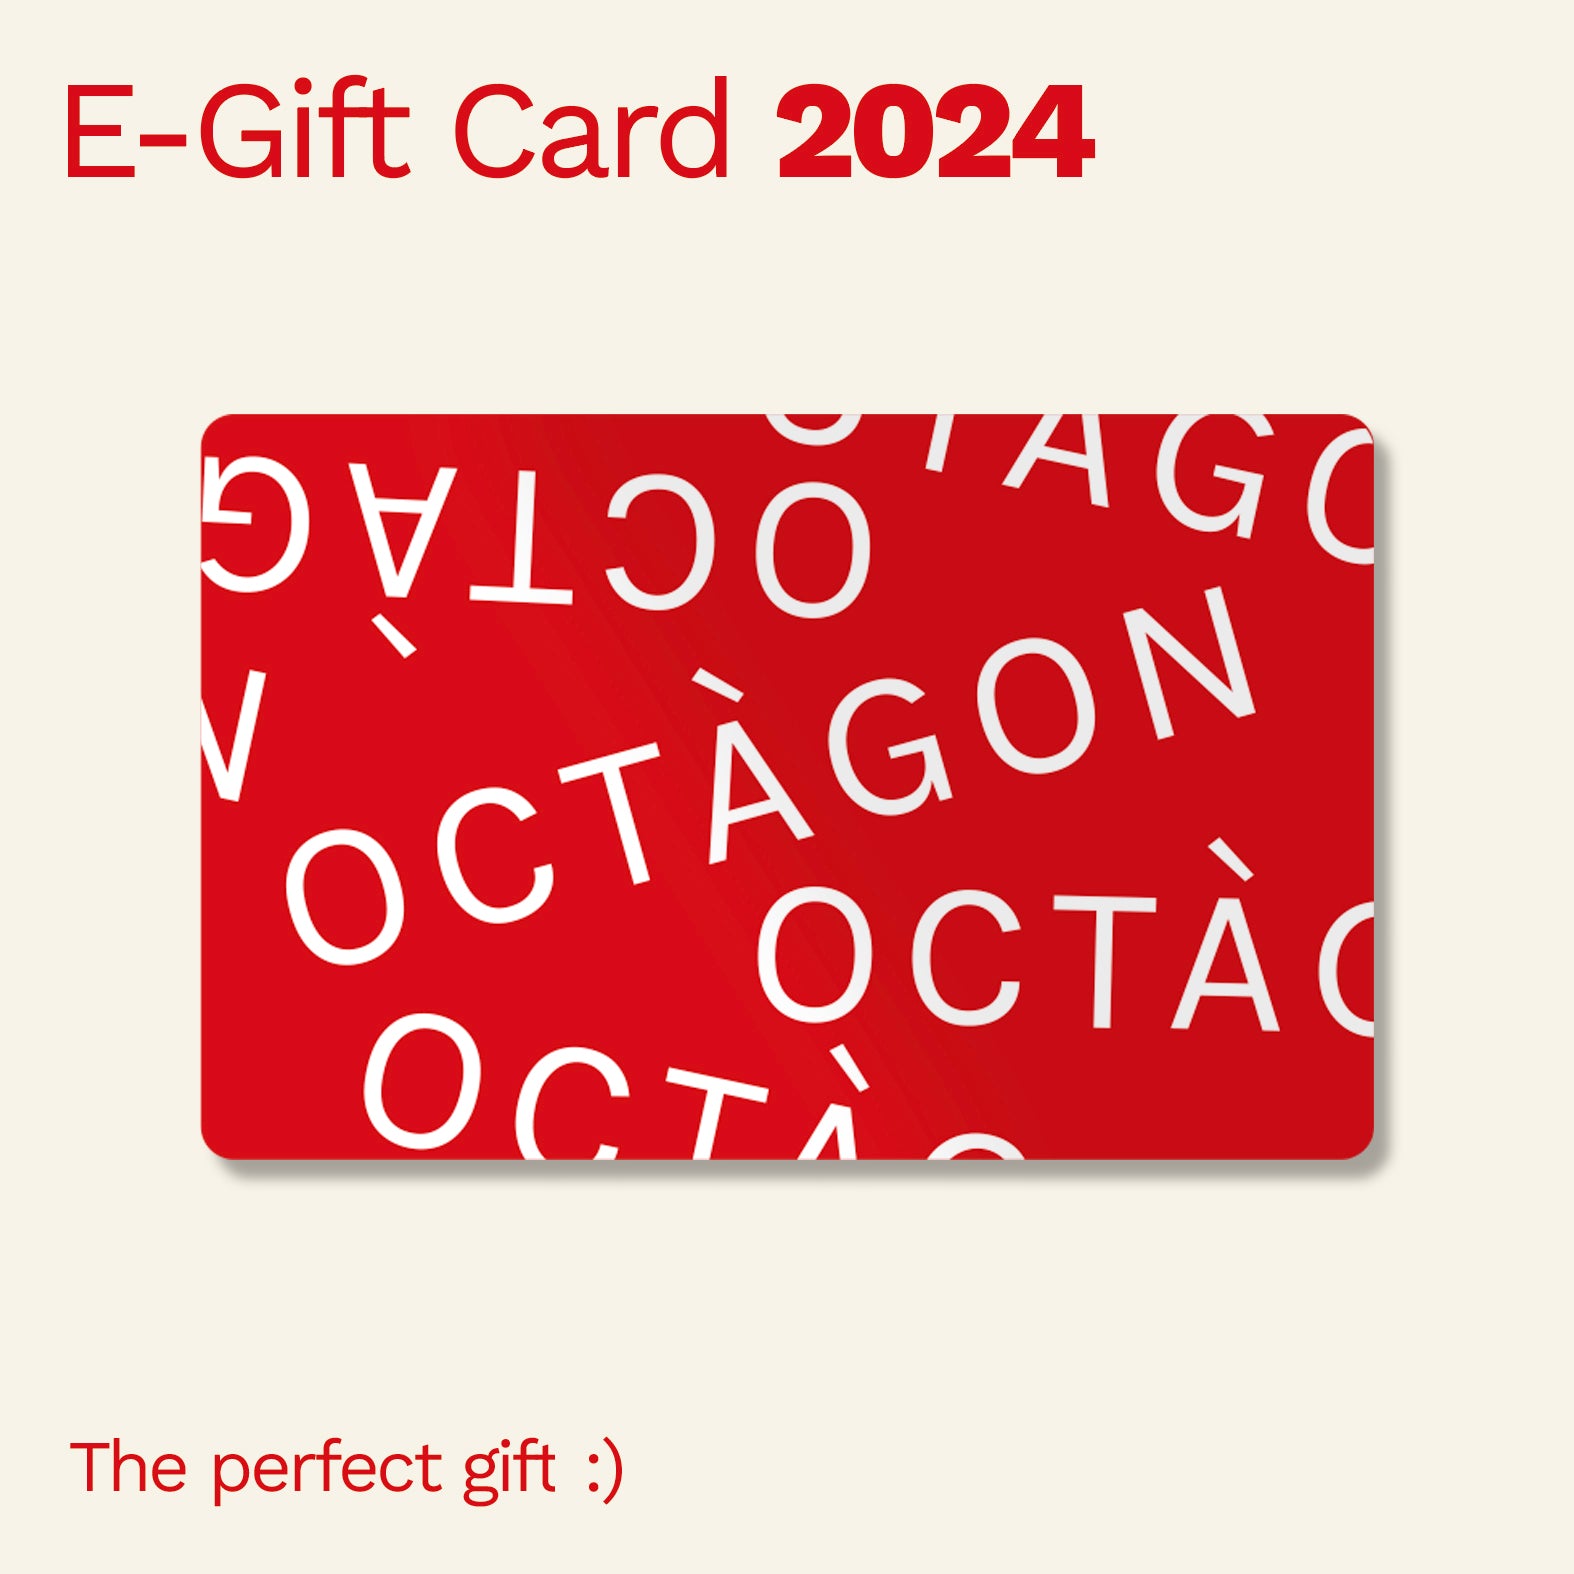 Octàgon Design E-Gift Card, the perfect gift.